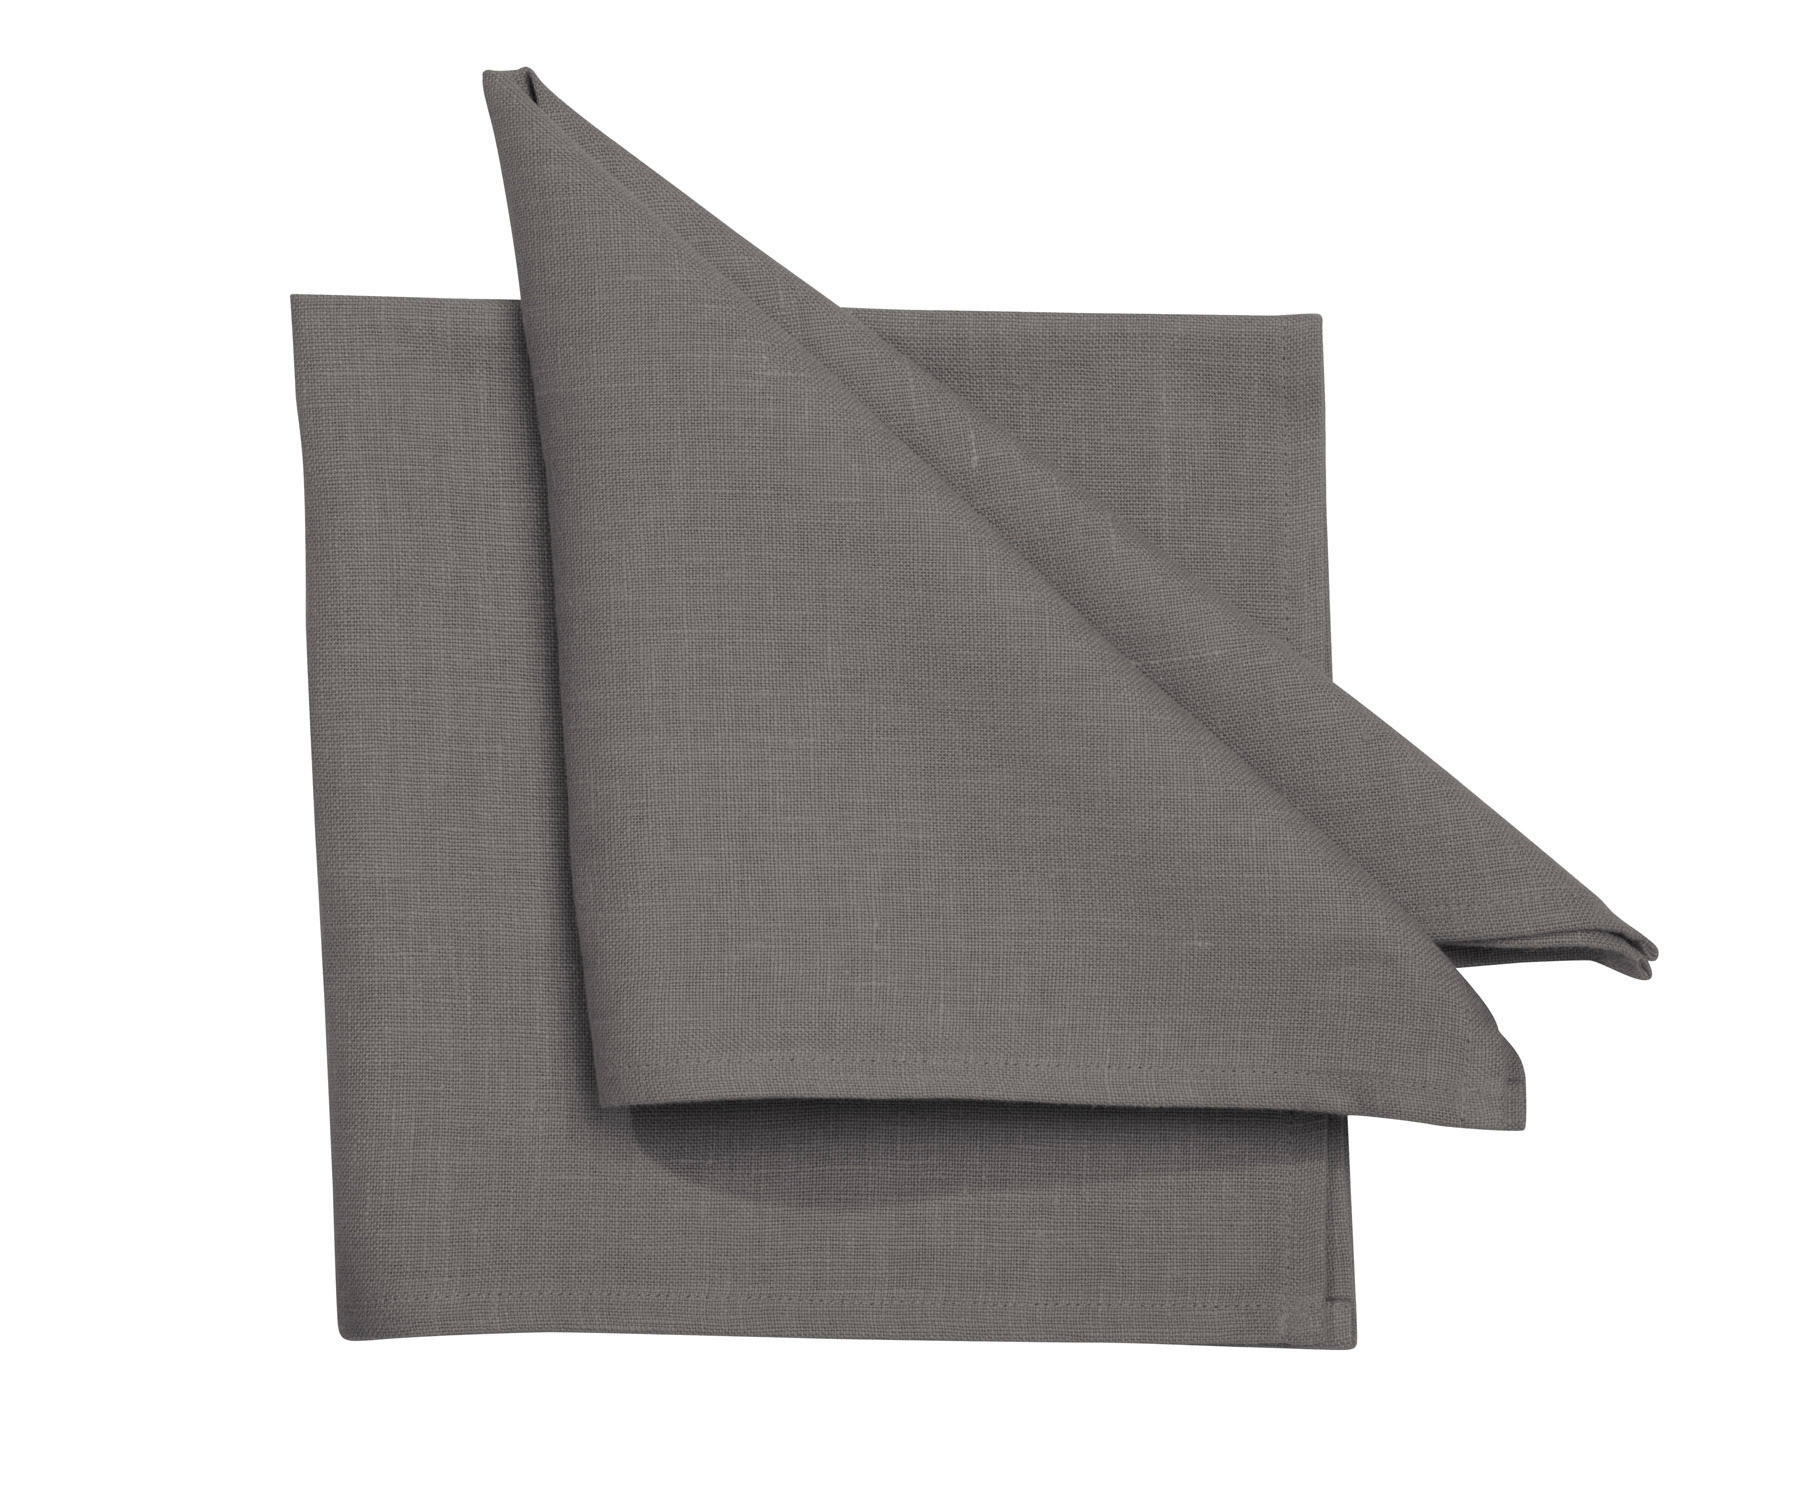 TISCHSET Textil Leinenoptik Graphitfarben 35/50 cm  - Graphitfarben, Basics, Textil (35/50cm) - Pichler